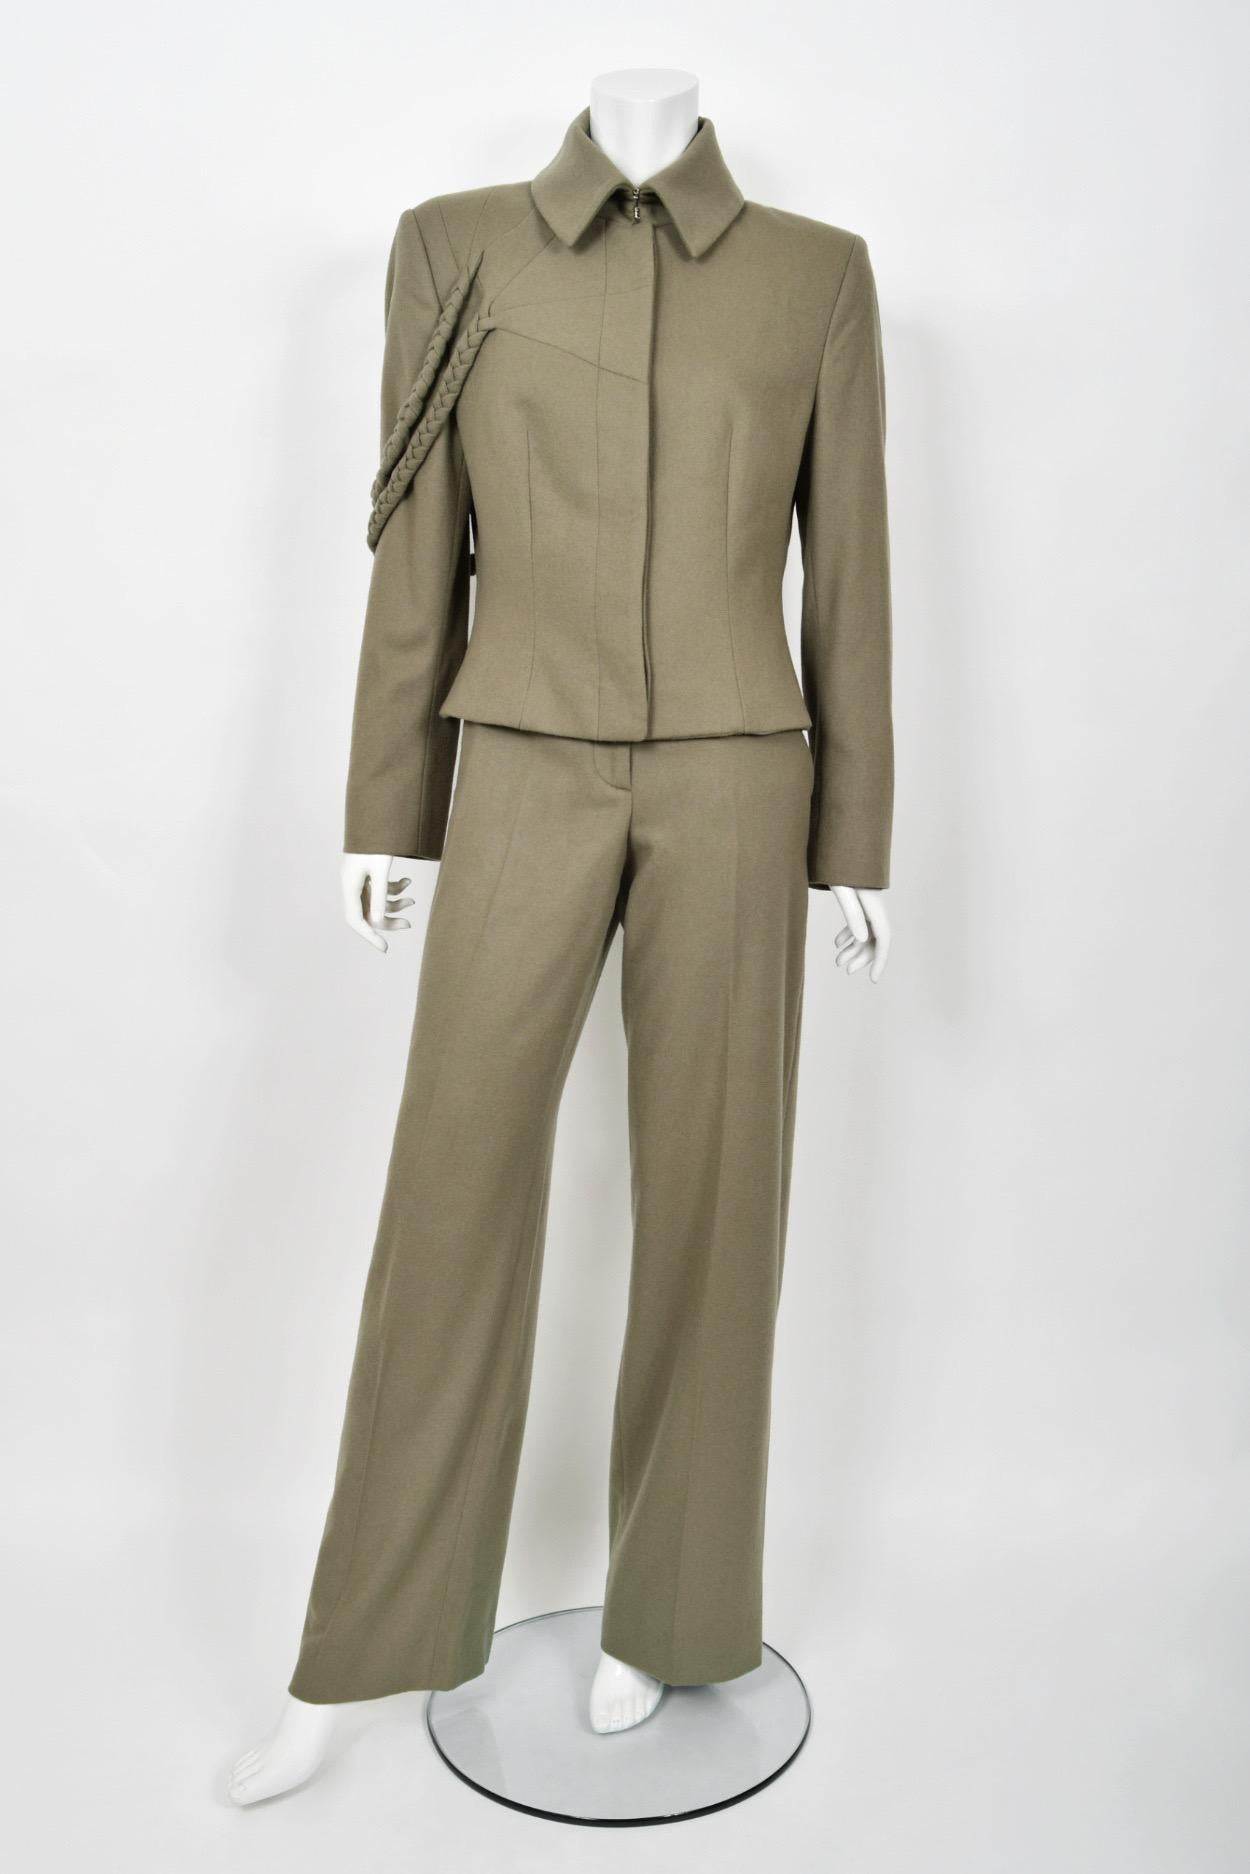 2001 Alexander McQueen Documented Runway Moss-Green Wool Braided Jacket Pantsuit For Sale 2